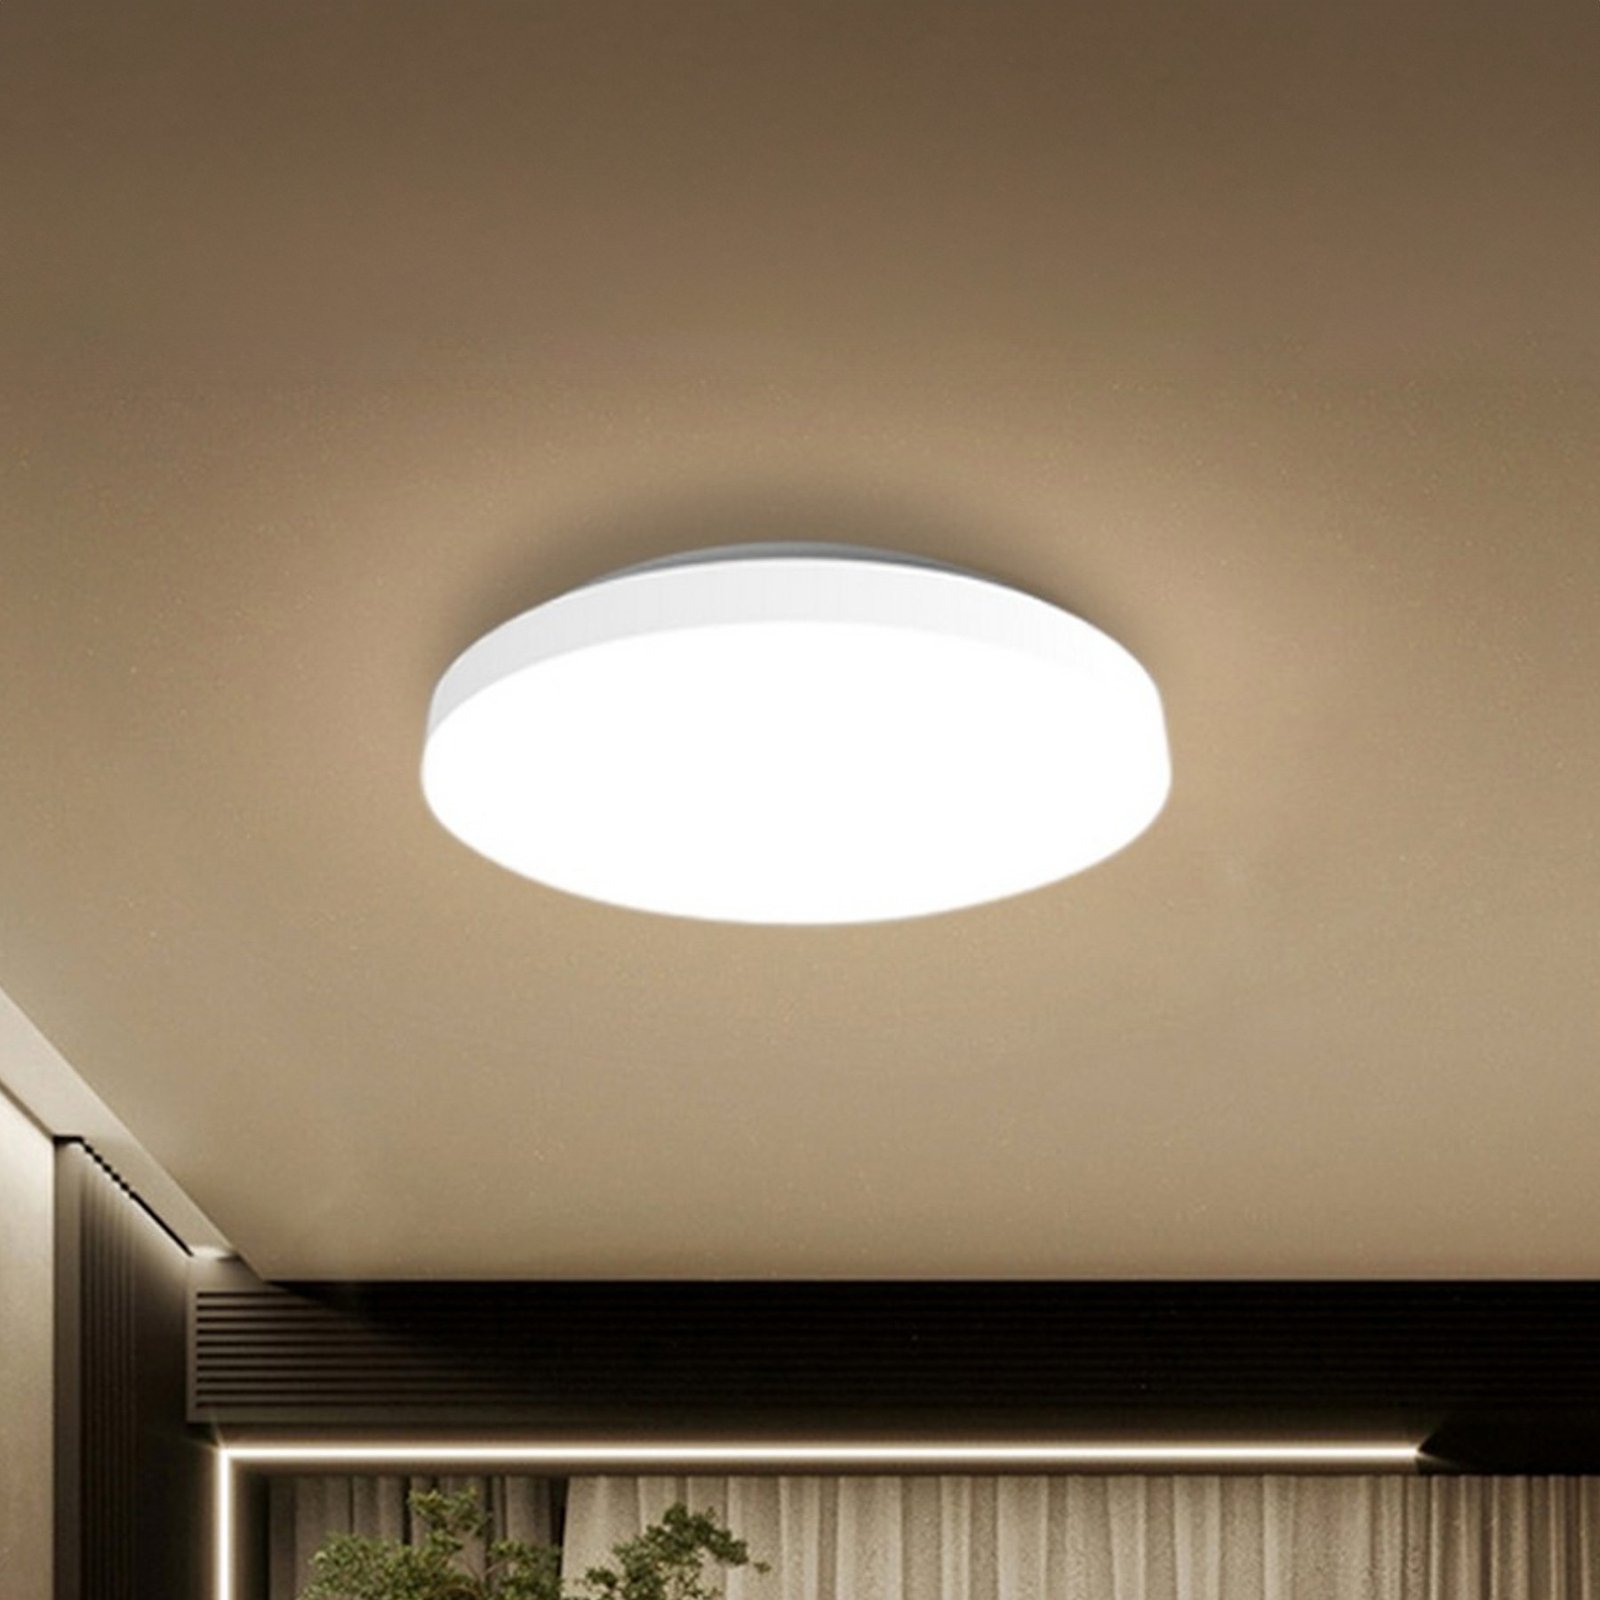 Lampa sufitowa LED Allrounder 1, regulowana barwa światła